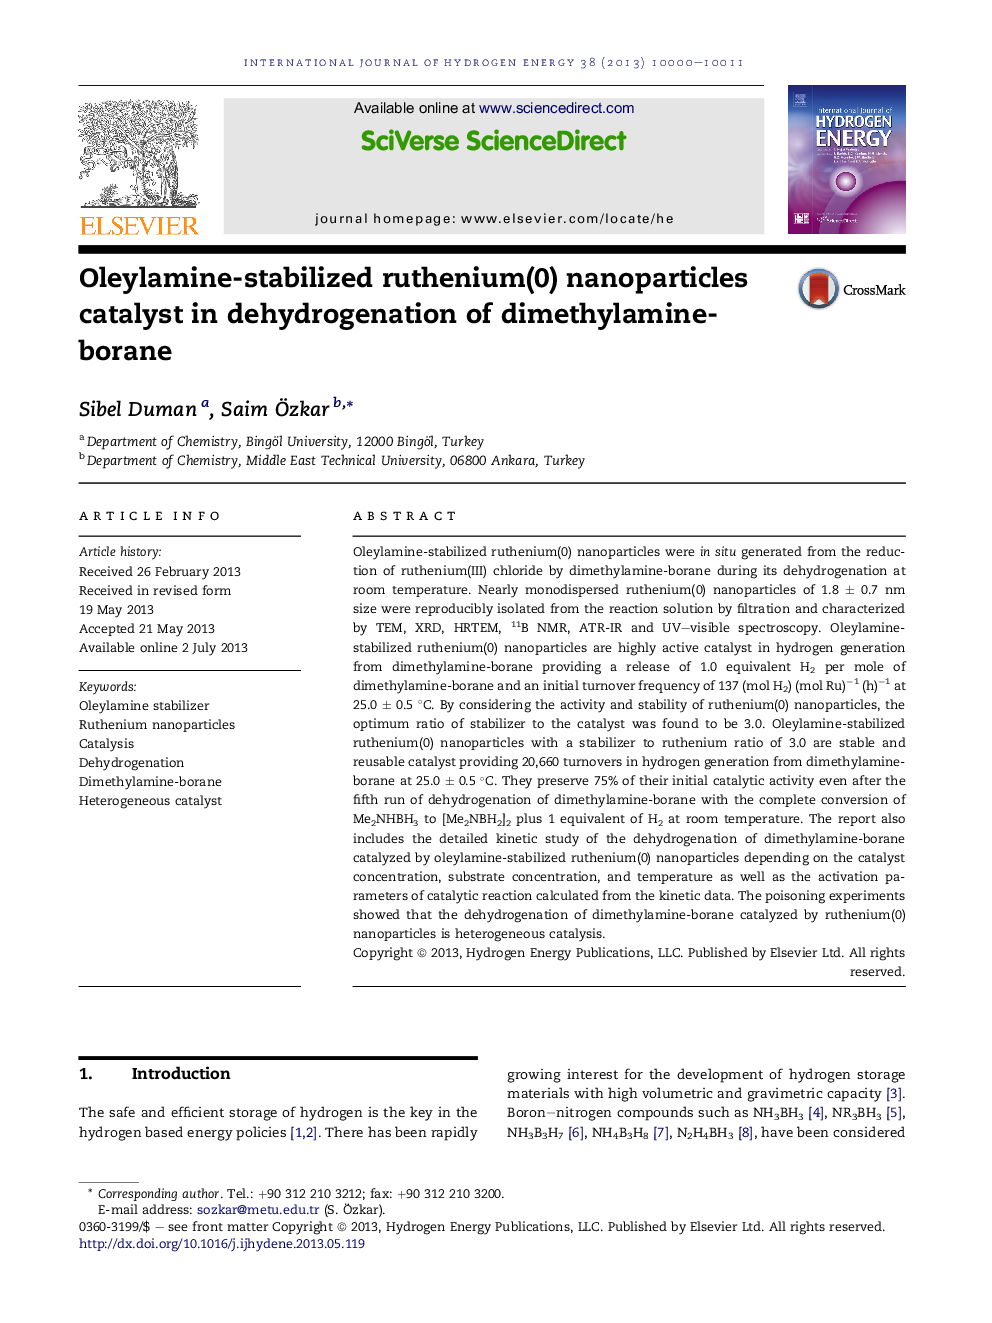 Oleylamine-stabilized ruthenium(0) nanoparticles catalyst in dehydrogenation of dimethylamine-borane